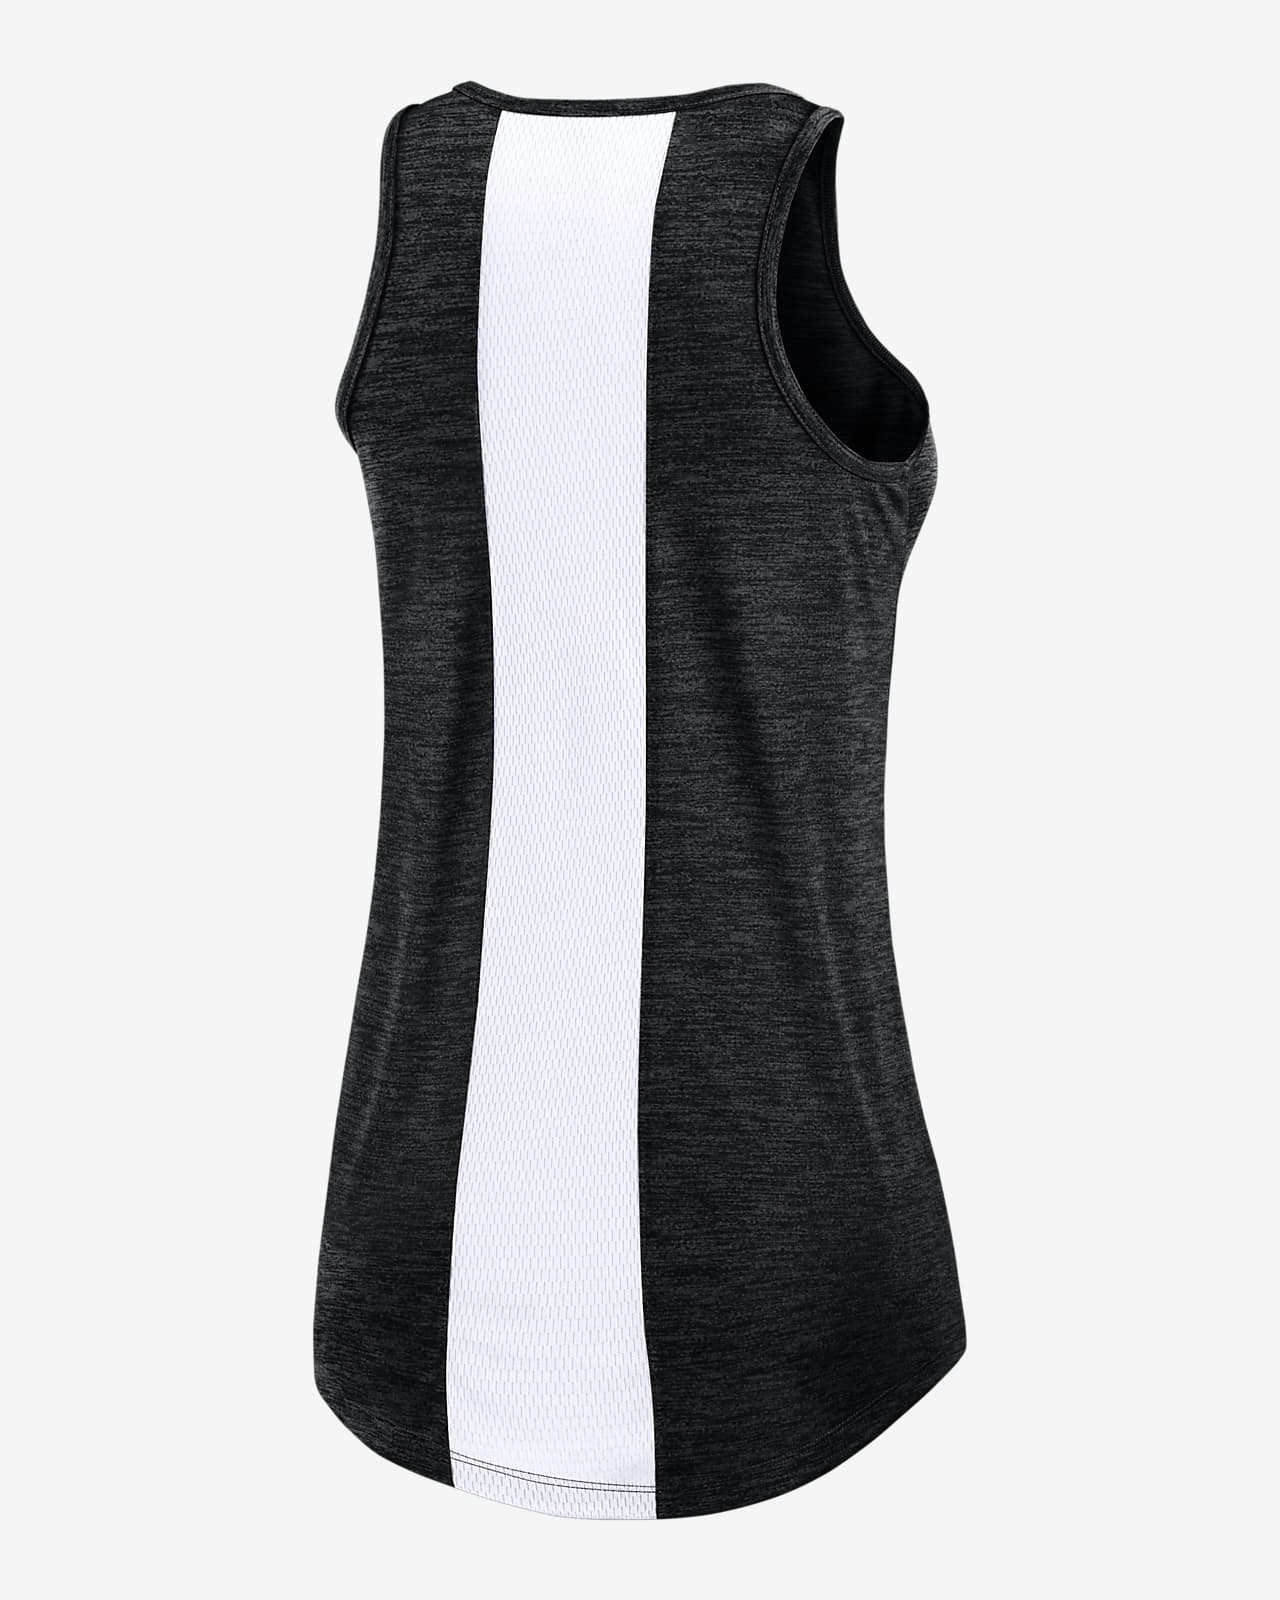 Nike Dri-Fit Chicago White Sox Baseball Black Hooded Sweatshirt Size 10/12